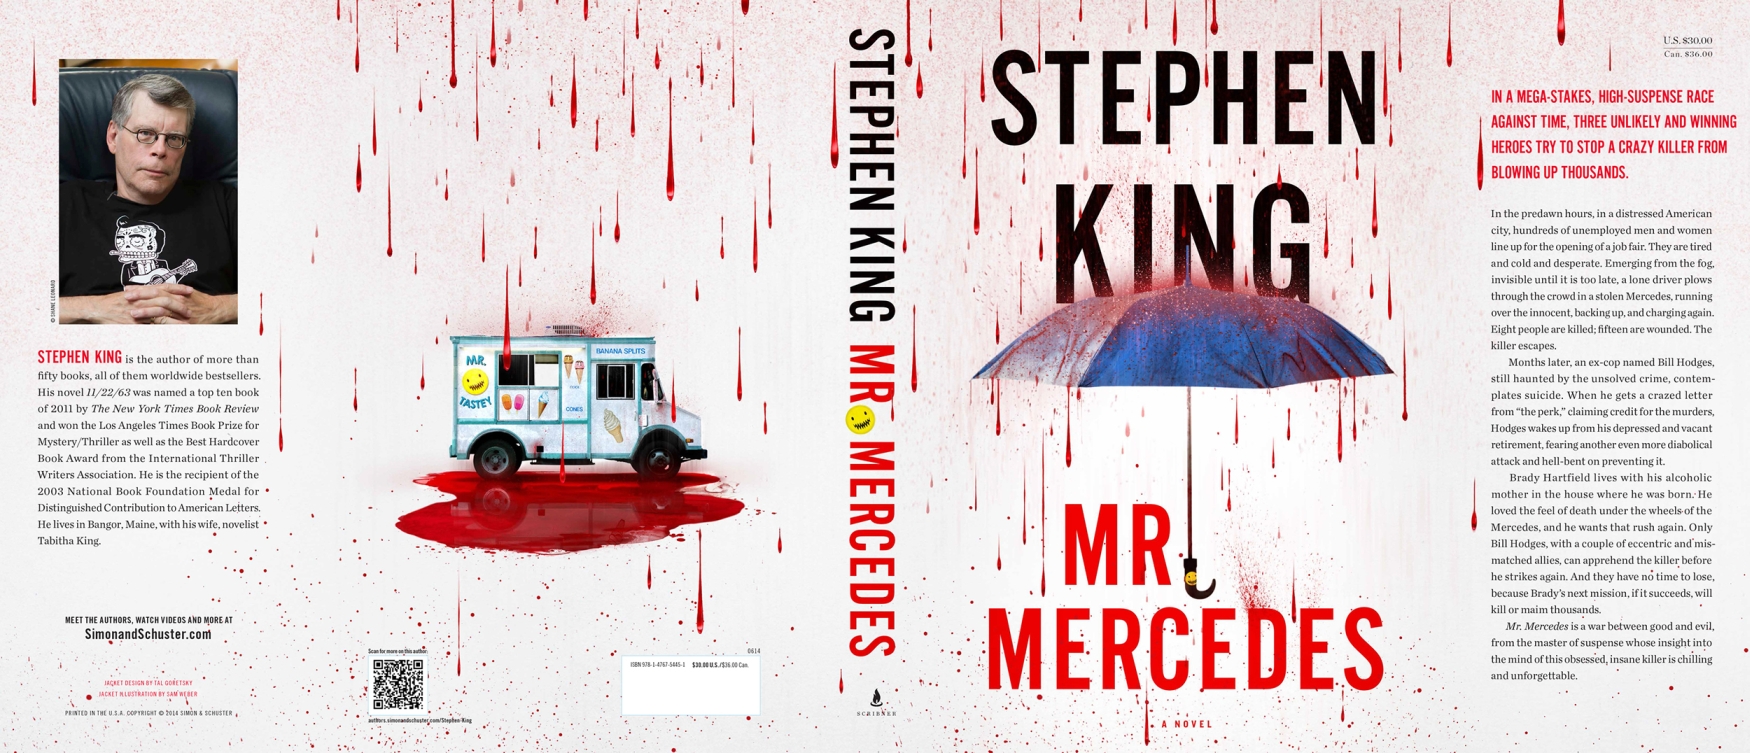 Stephen king mr mercedes